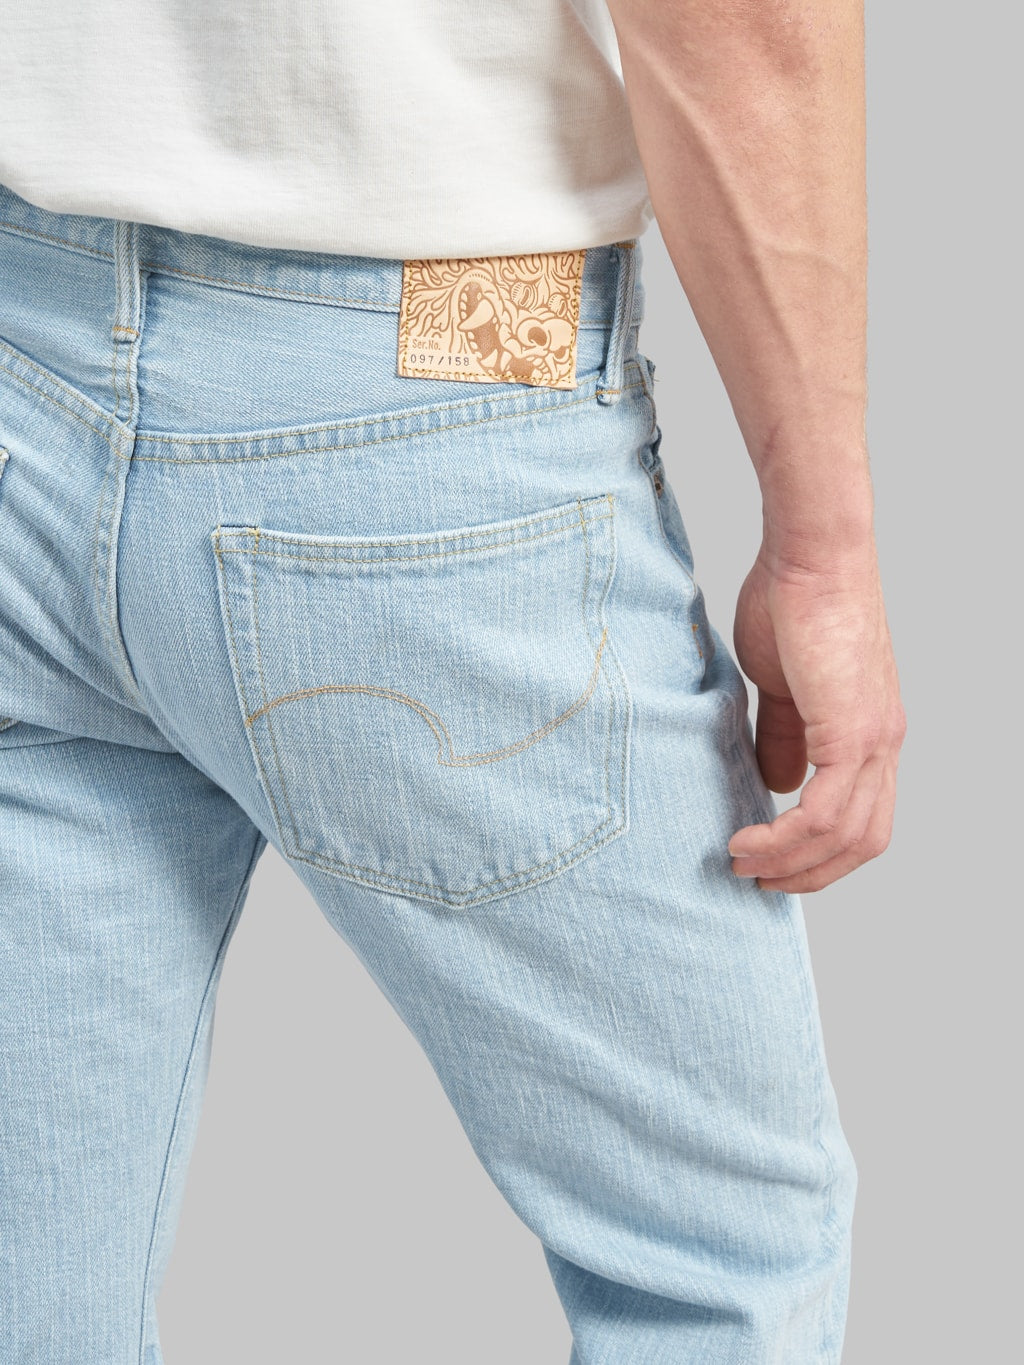 redcast heritage x oni denim kerama blue 15oz selvedge jeans back details